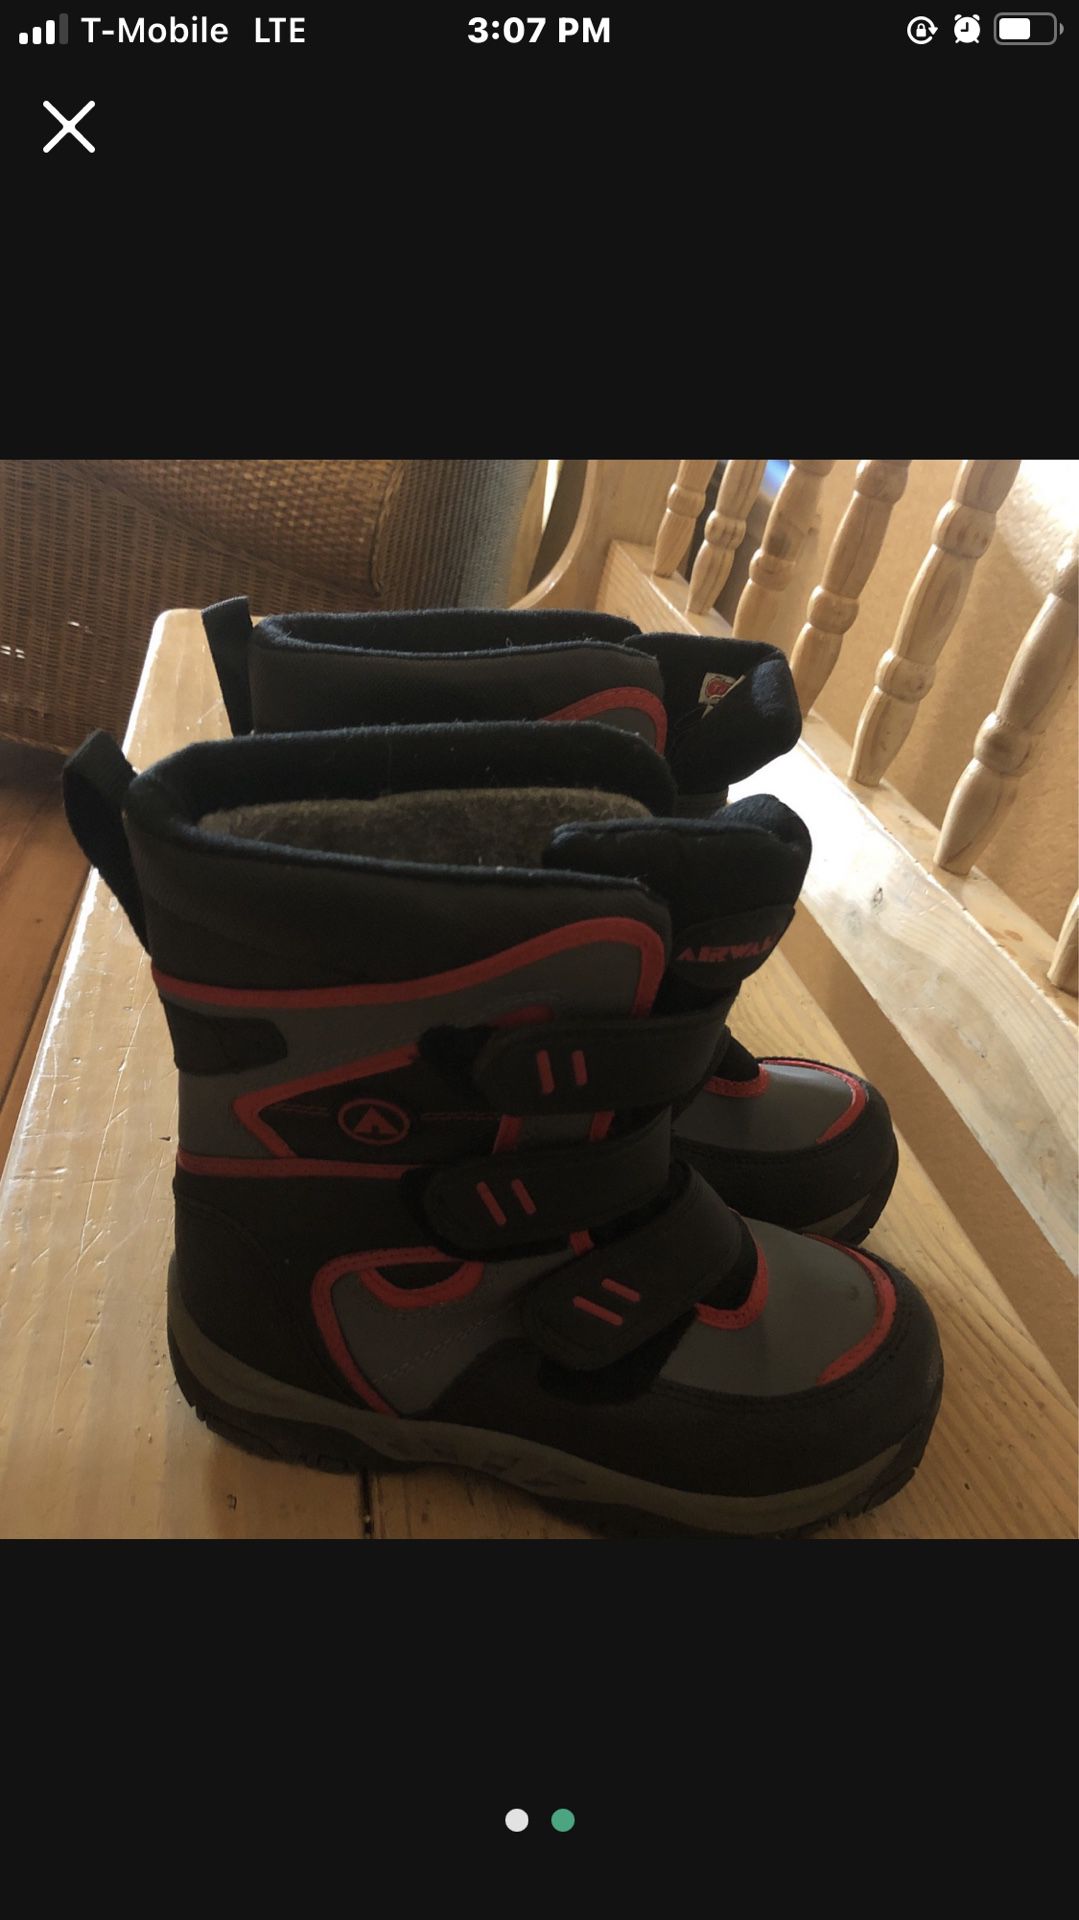 Air walk snow boots size 4